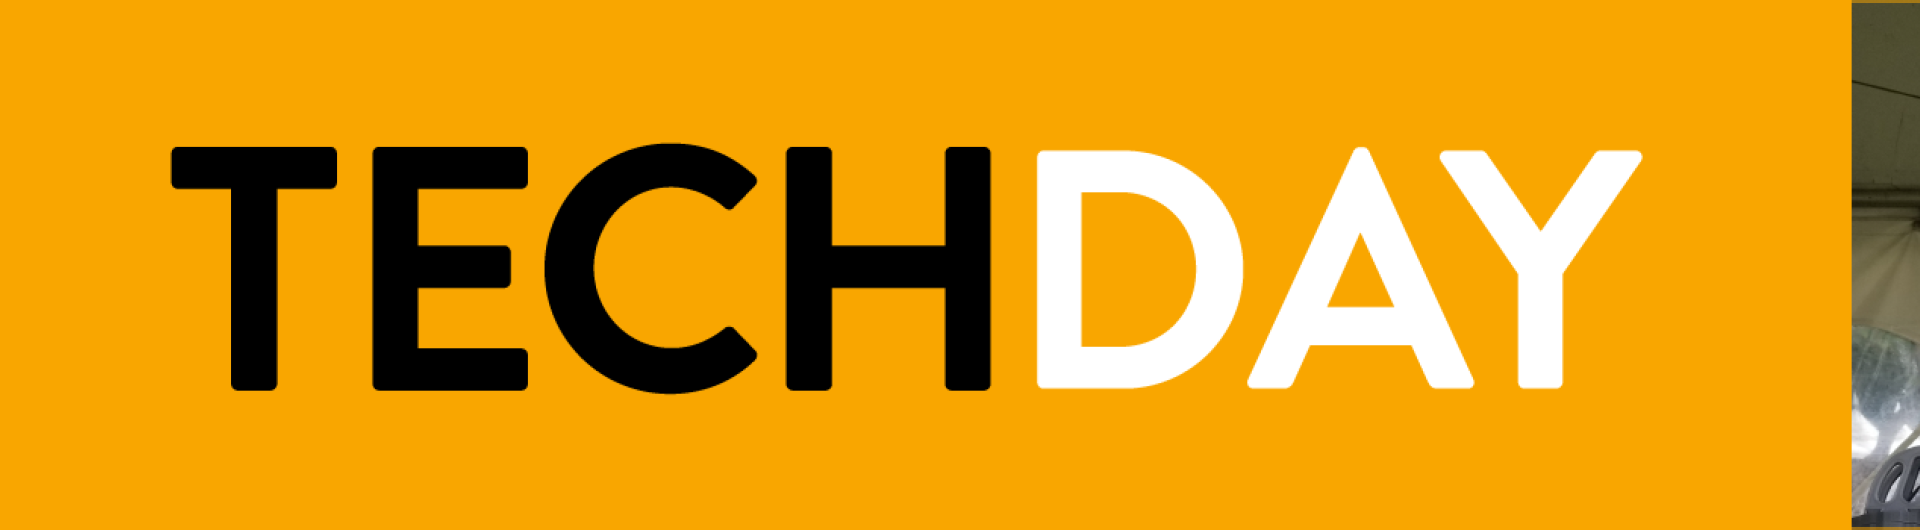 TechDay Banner